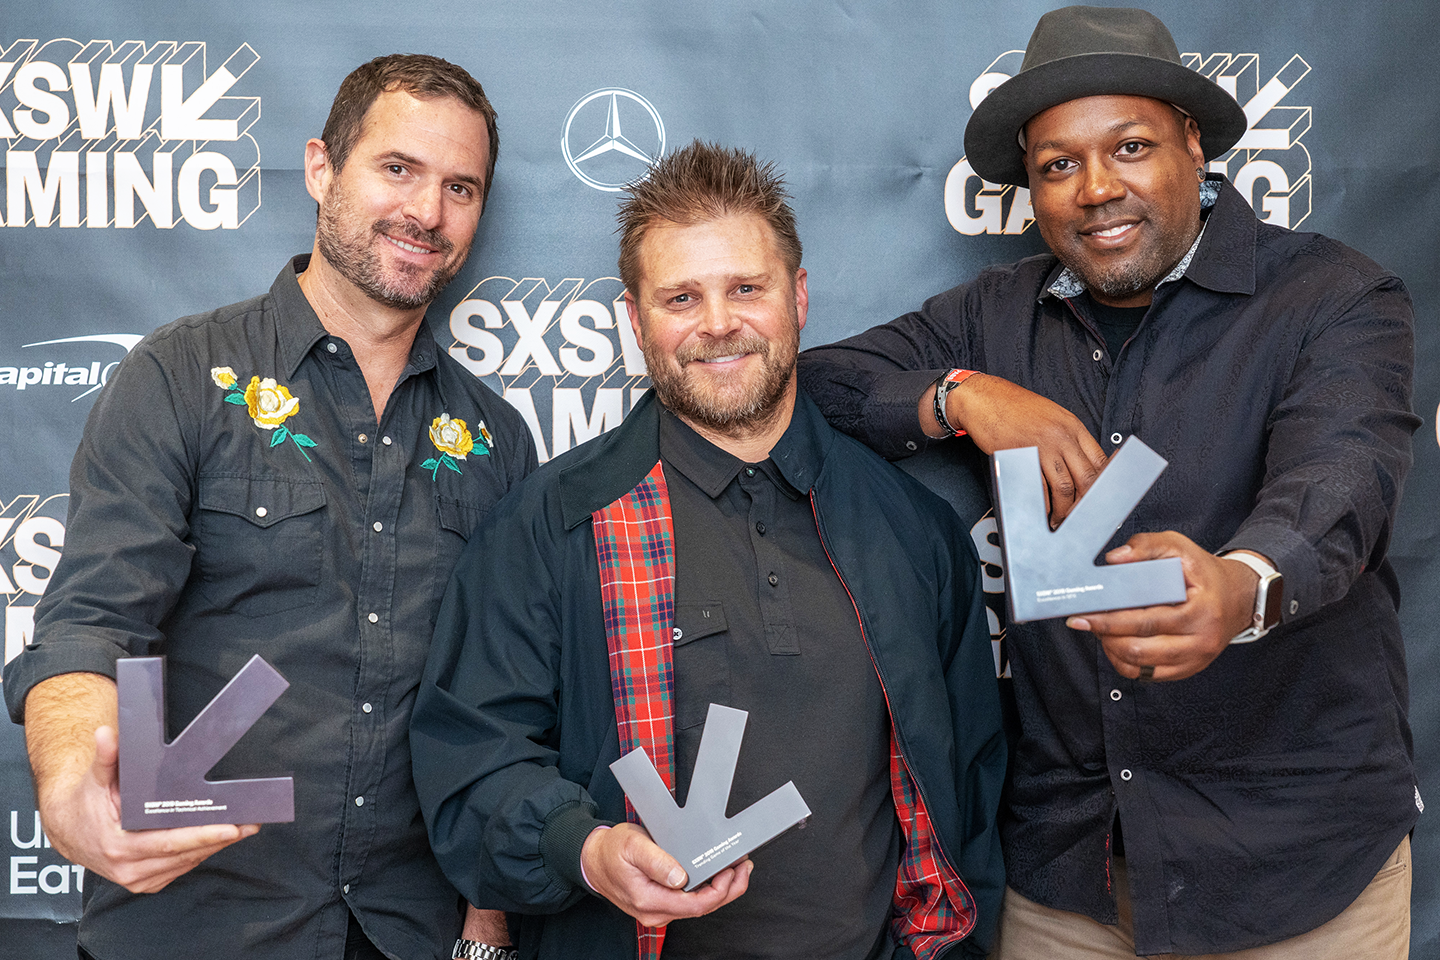 SXSW Game Awards Winners Announced - mxdwn Games